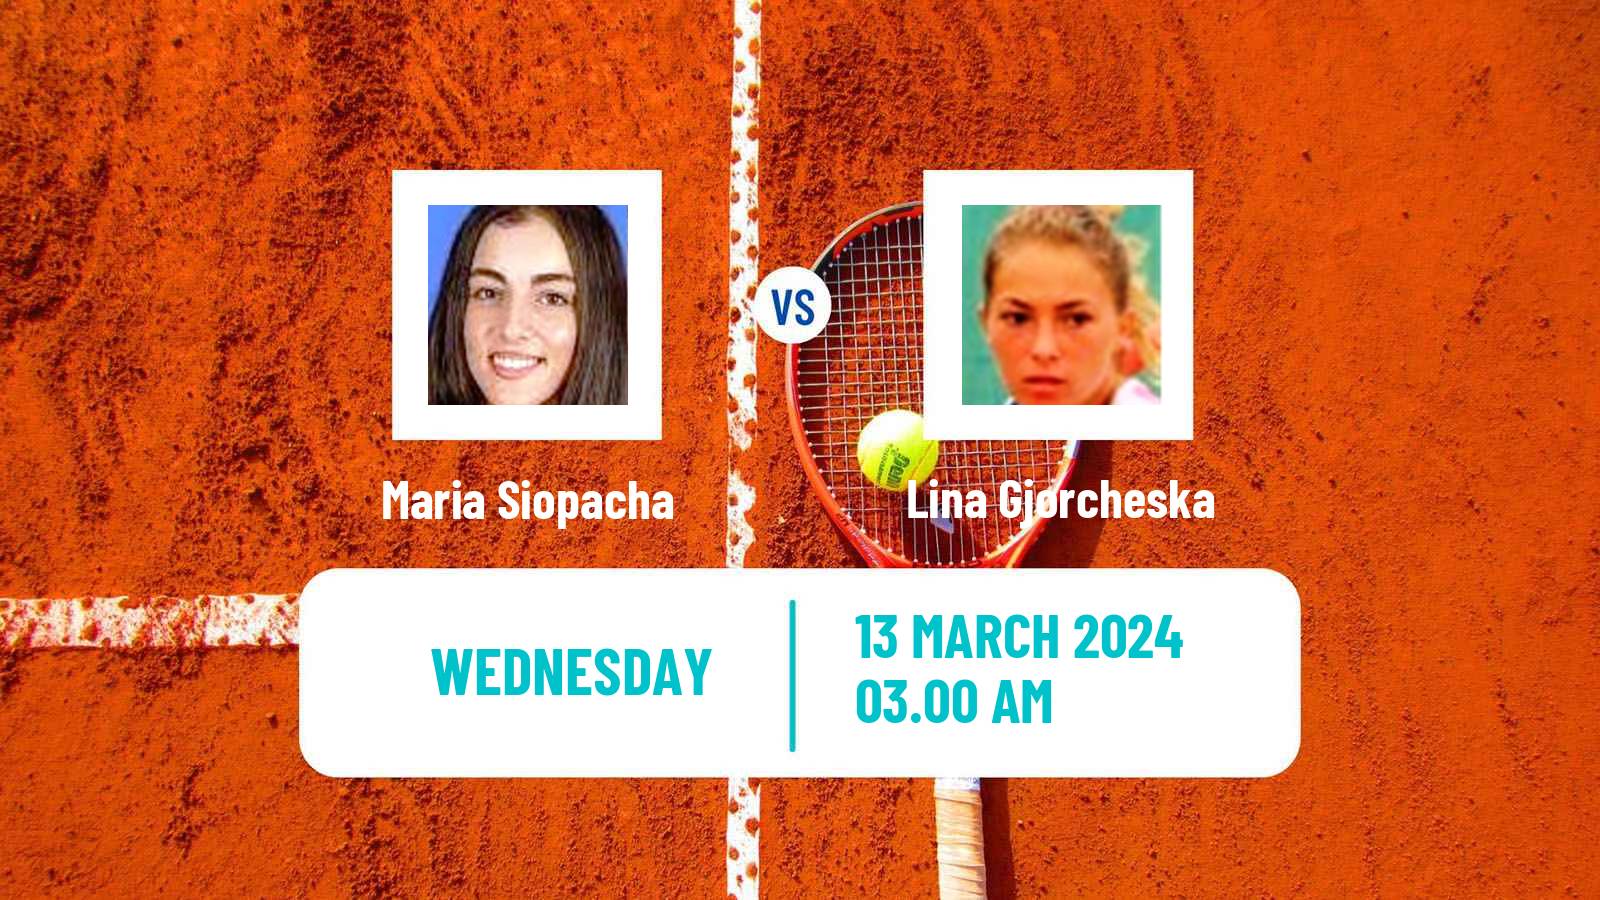 Tennis ITF W35 Alaminos Larnaca Women Maria Siopacha - Lina Gjorcheska